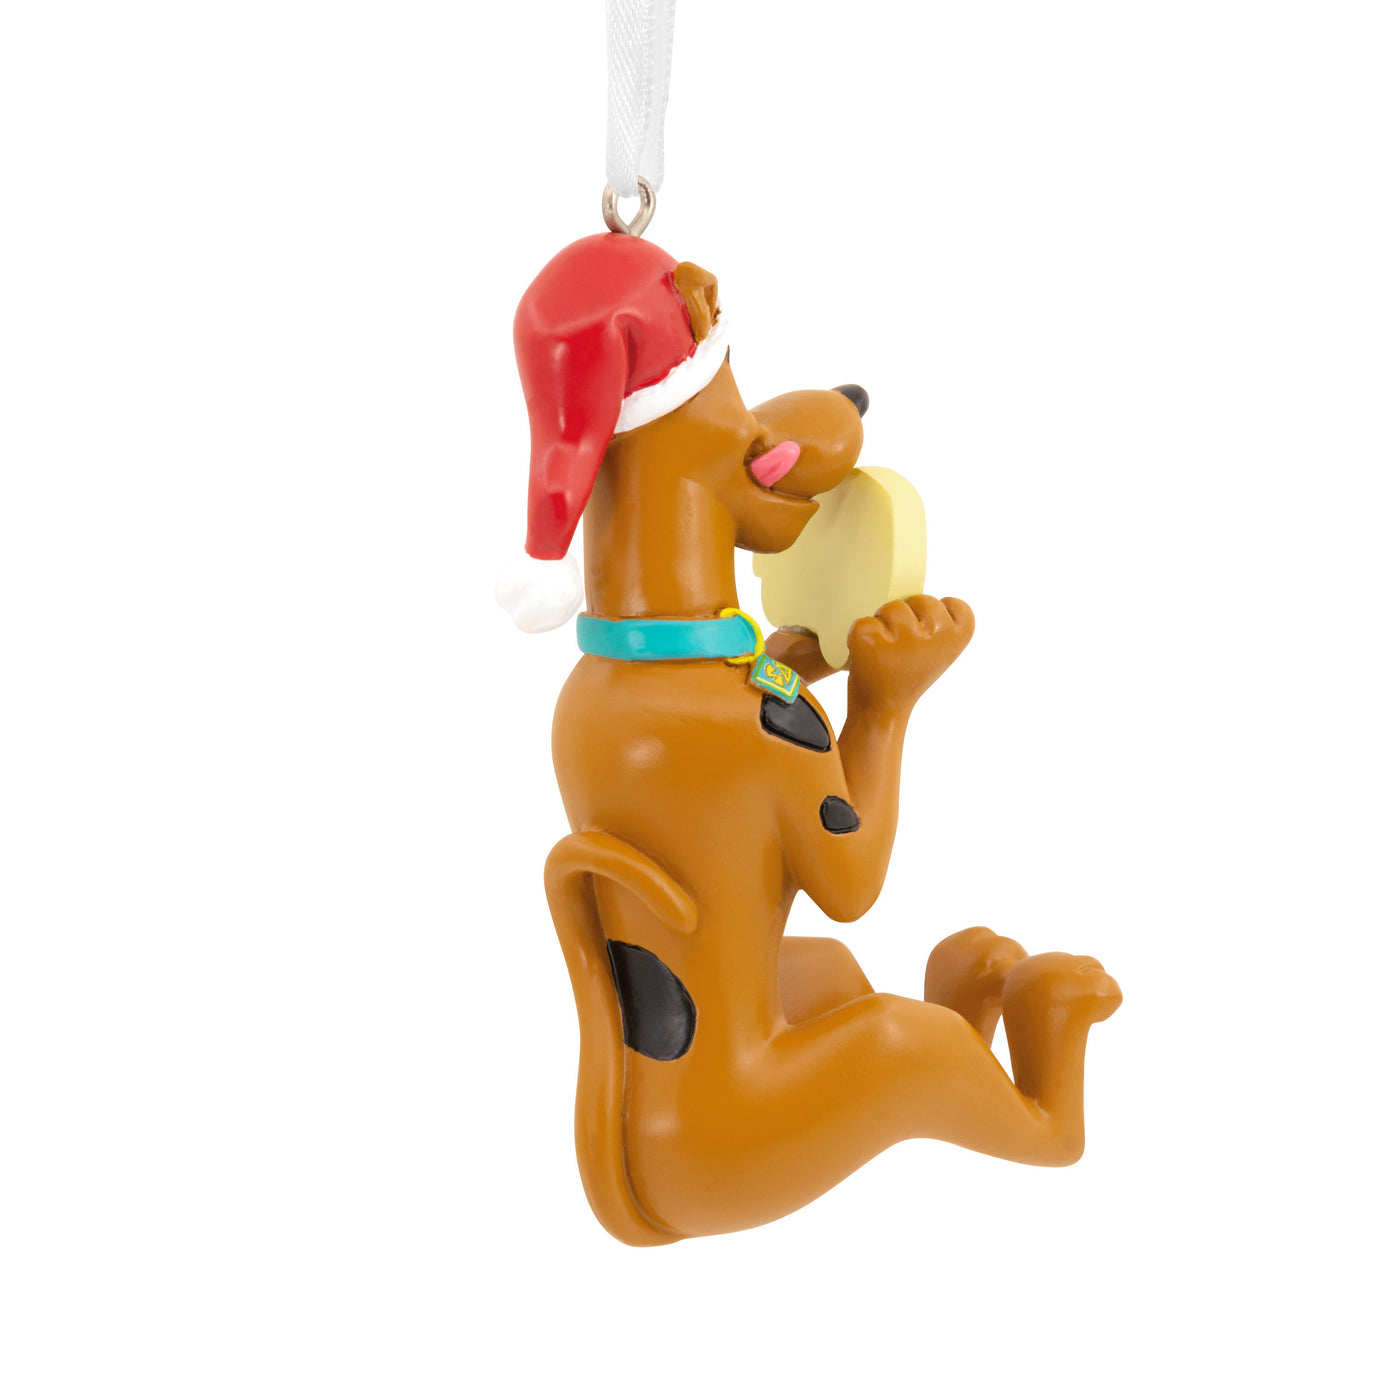 Scooby Doo - Scooby Doo Eating Cookie Ornament